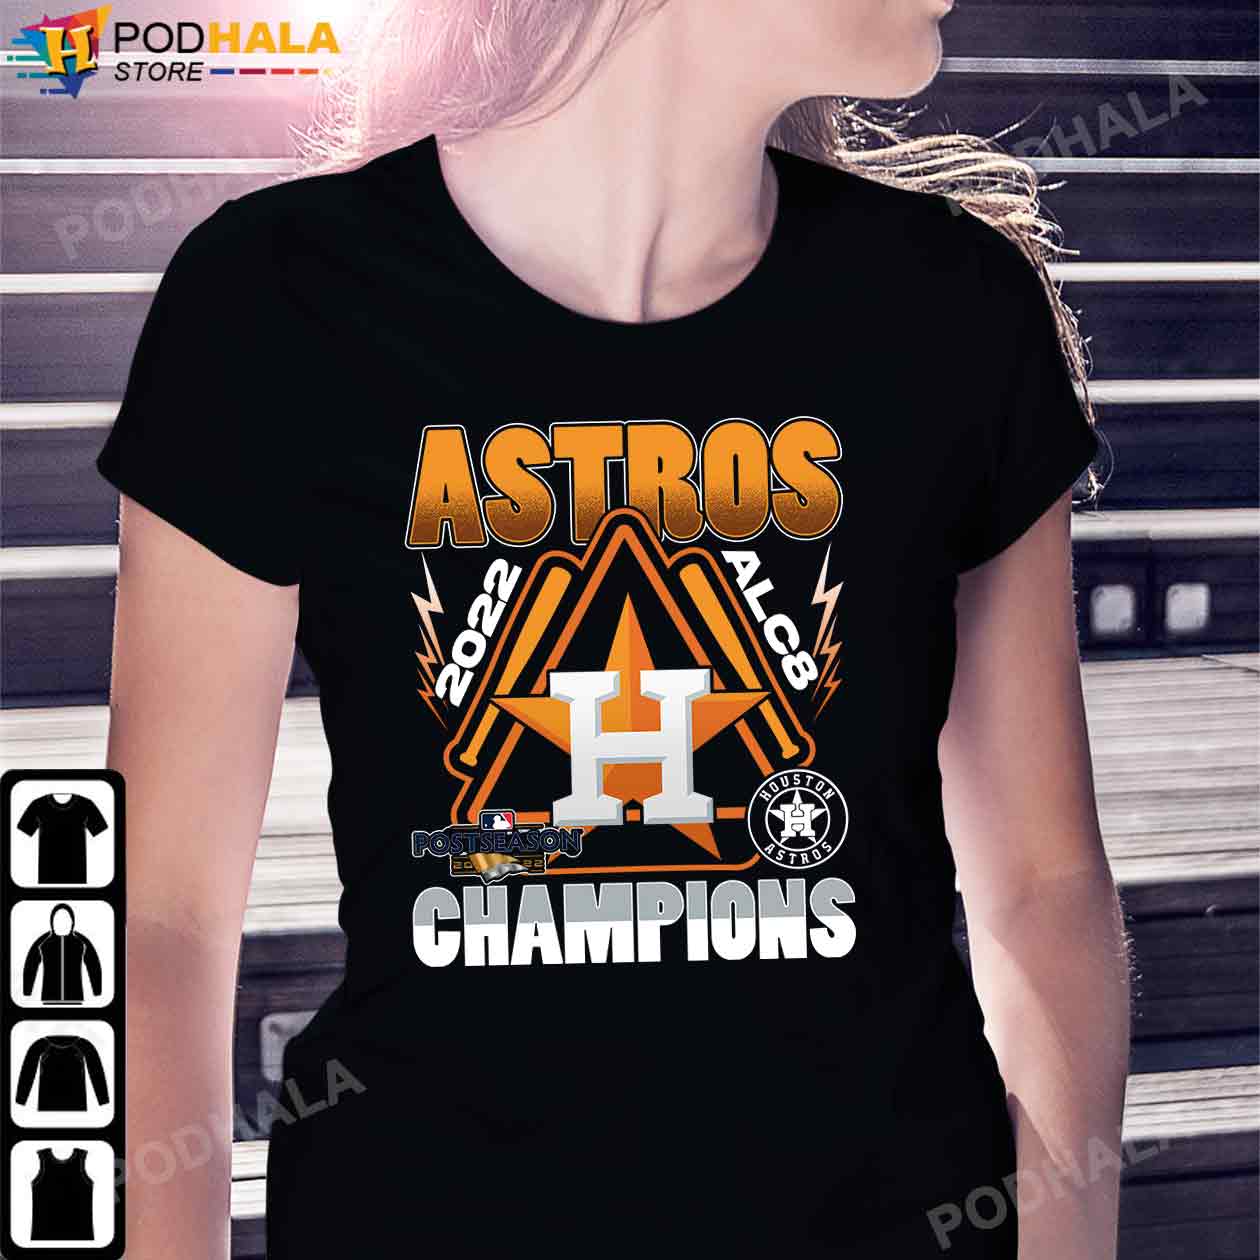 astros t shirt championship